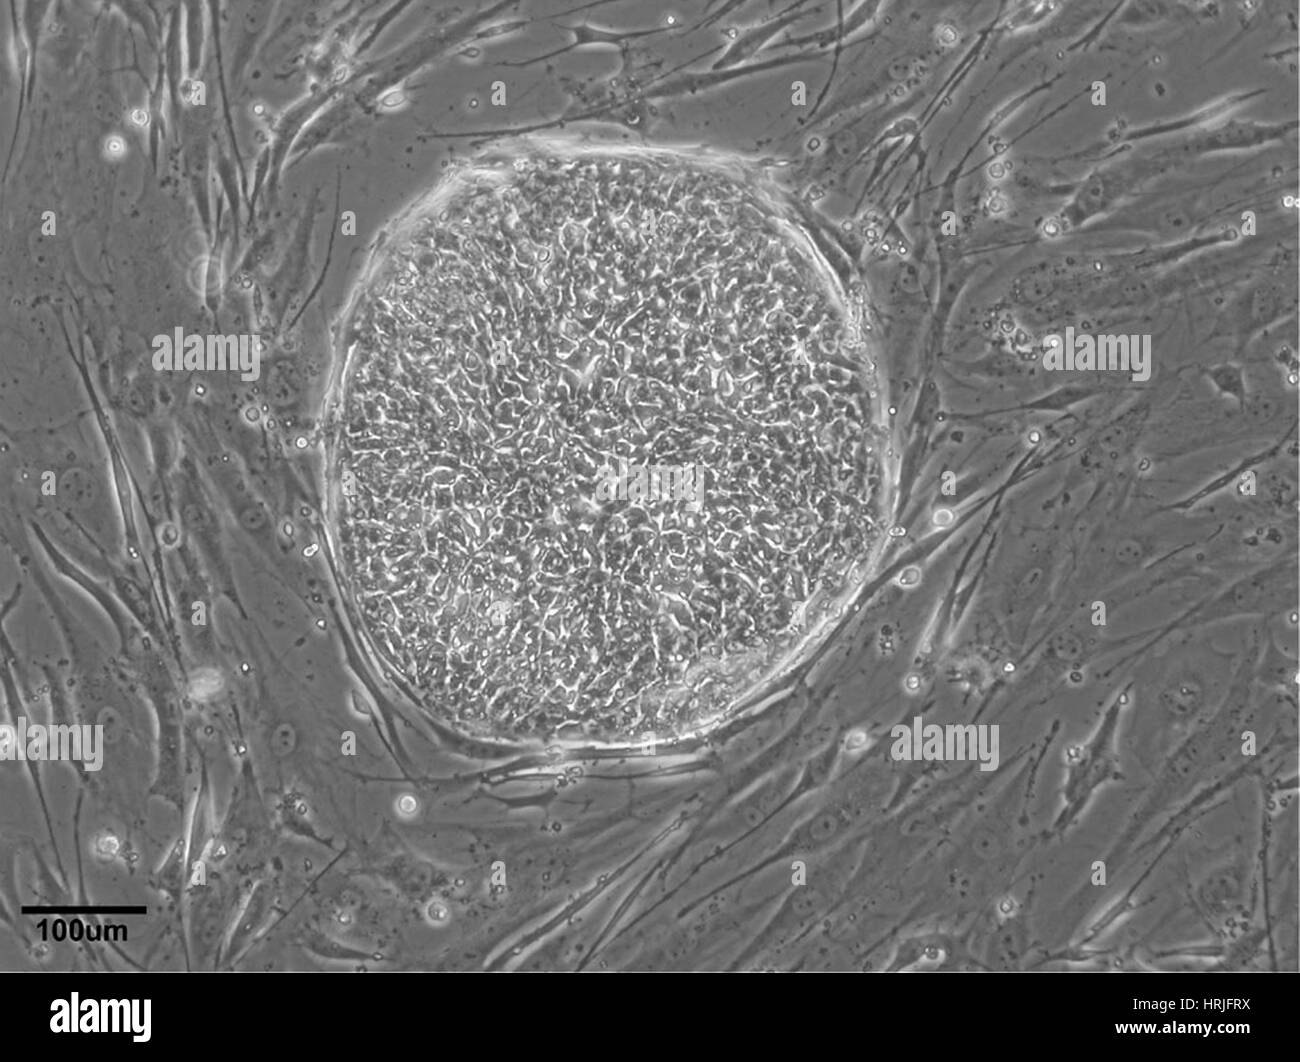 Di cellule staminali embrionali umane Linea UC06 Foto Stock